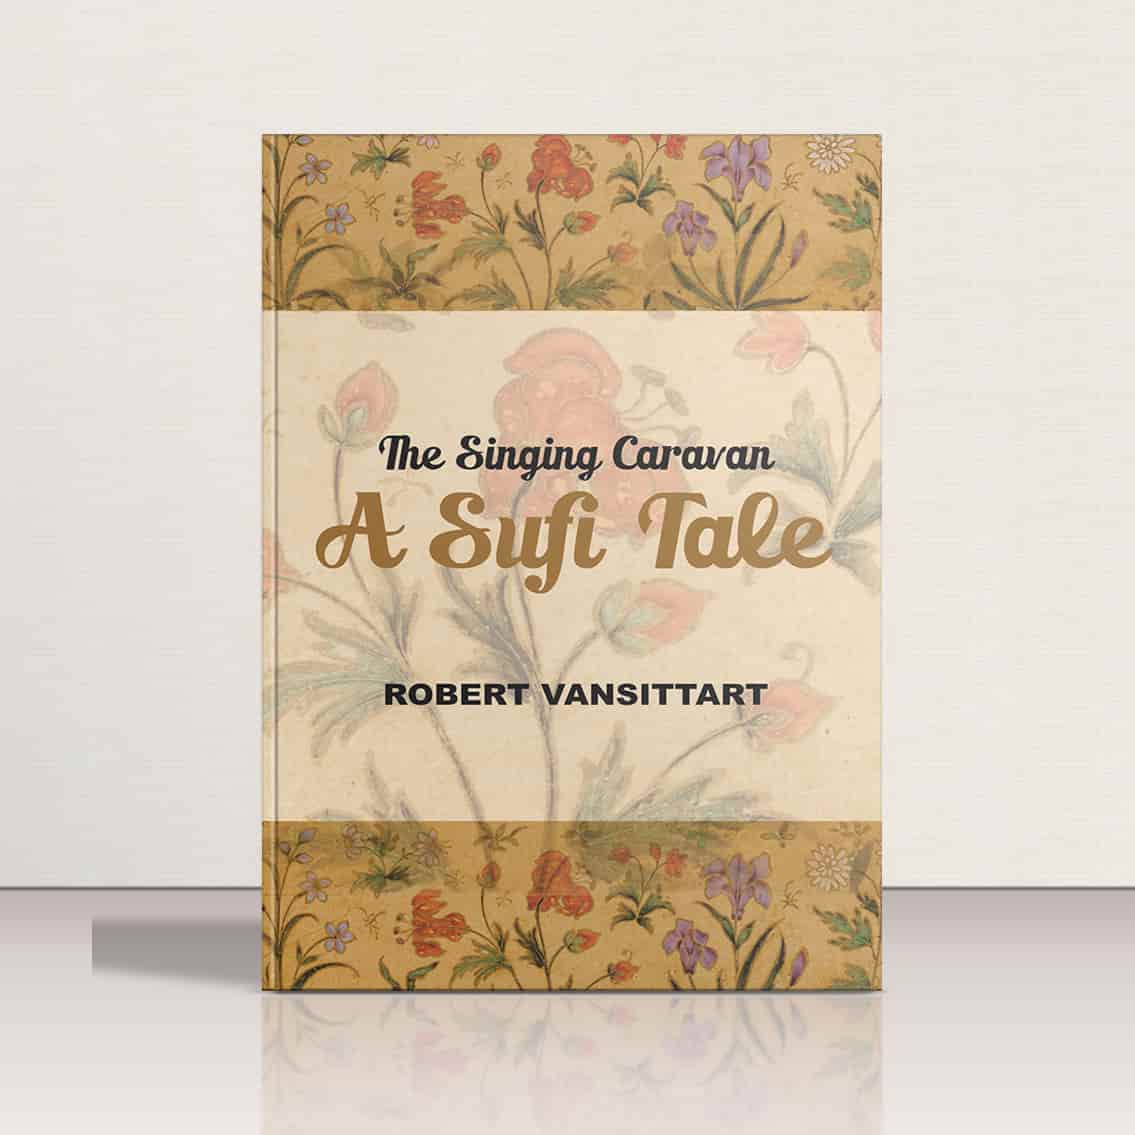 The Singing Caravan-A Sufi Tale by Robert Vansittart